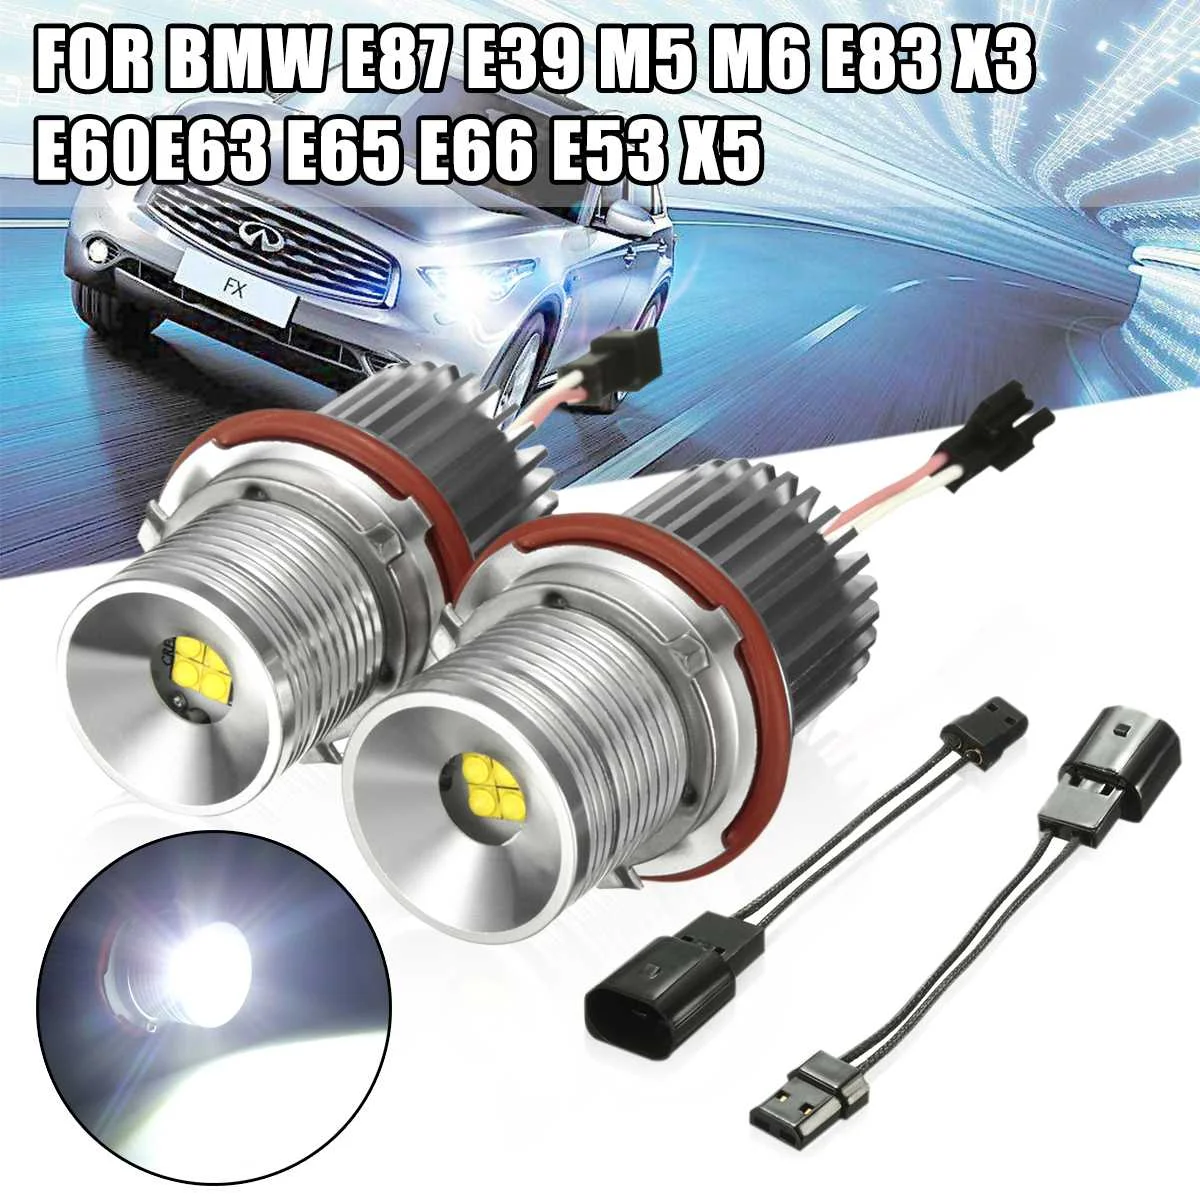 

2X 40W H8 Car LED Angel Eyes Marker Light Bulb Halo Ring Lamp 63126916097 For BMW E39 E60 E61 E63 E64 E65 E66 E83 X3 E53 X5 E87